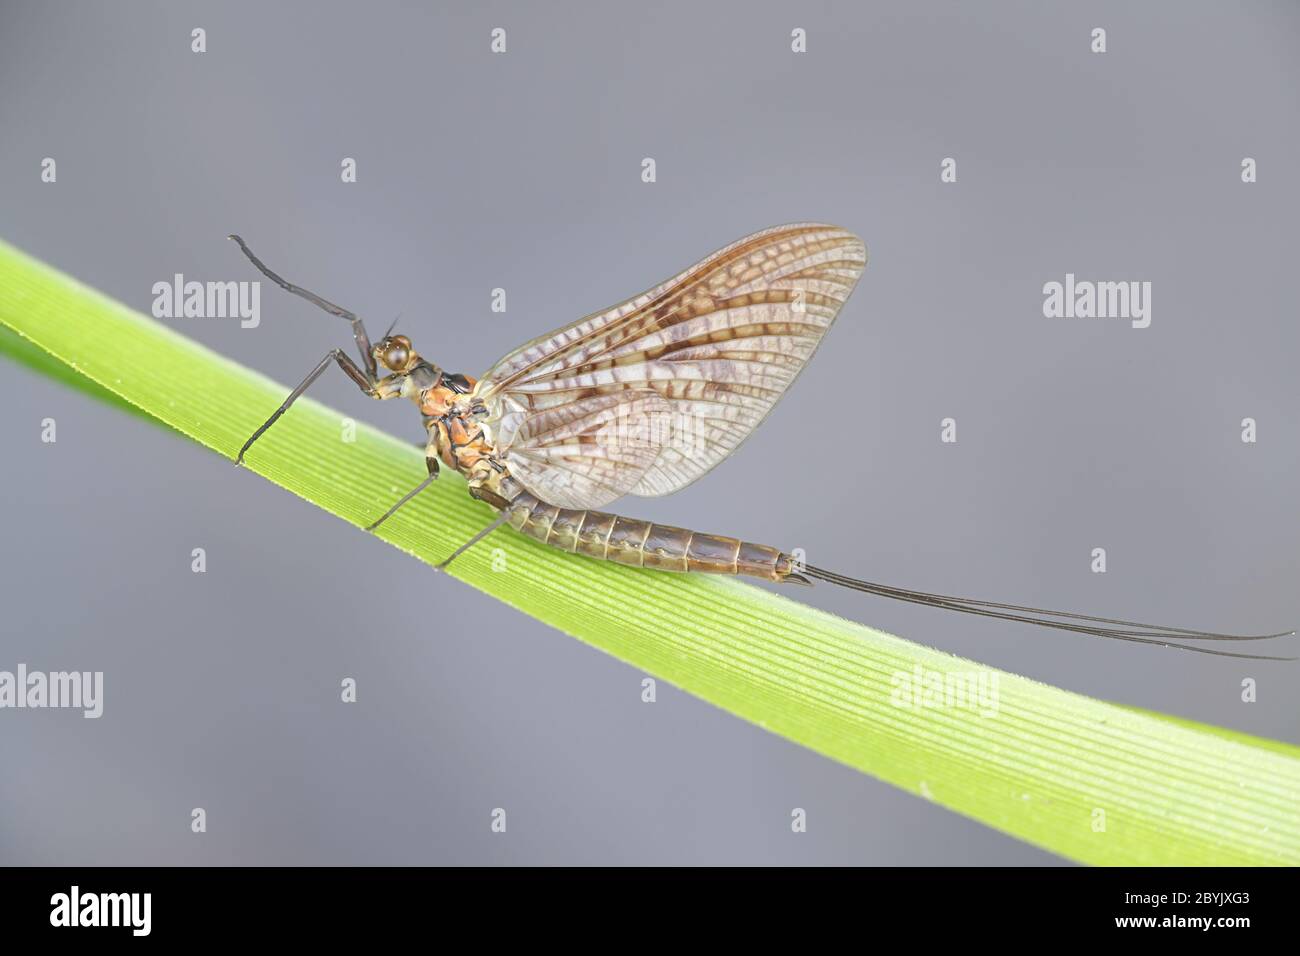 Ephemera vulgata, una specie di mayfly nel genere Ephemera, comunemente chiamata anche soldato canadese, shadfly o fishfly Foto Stock